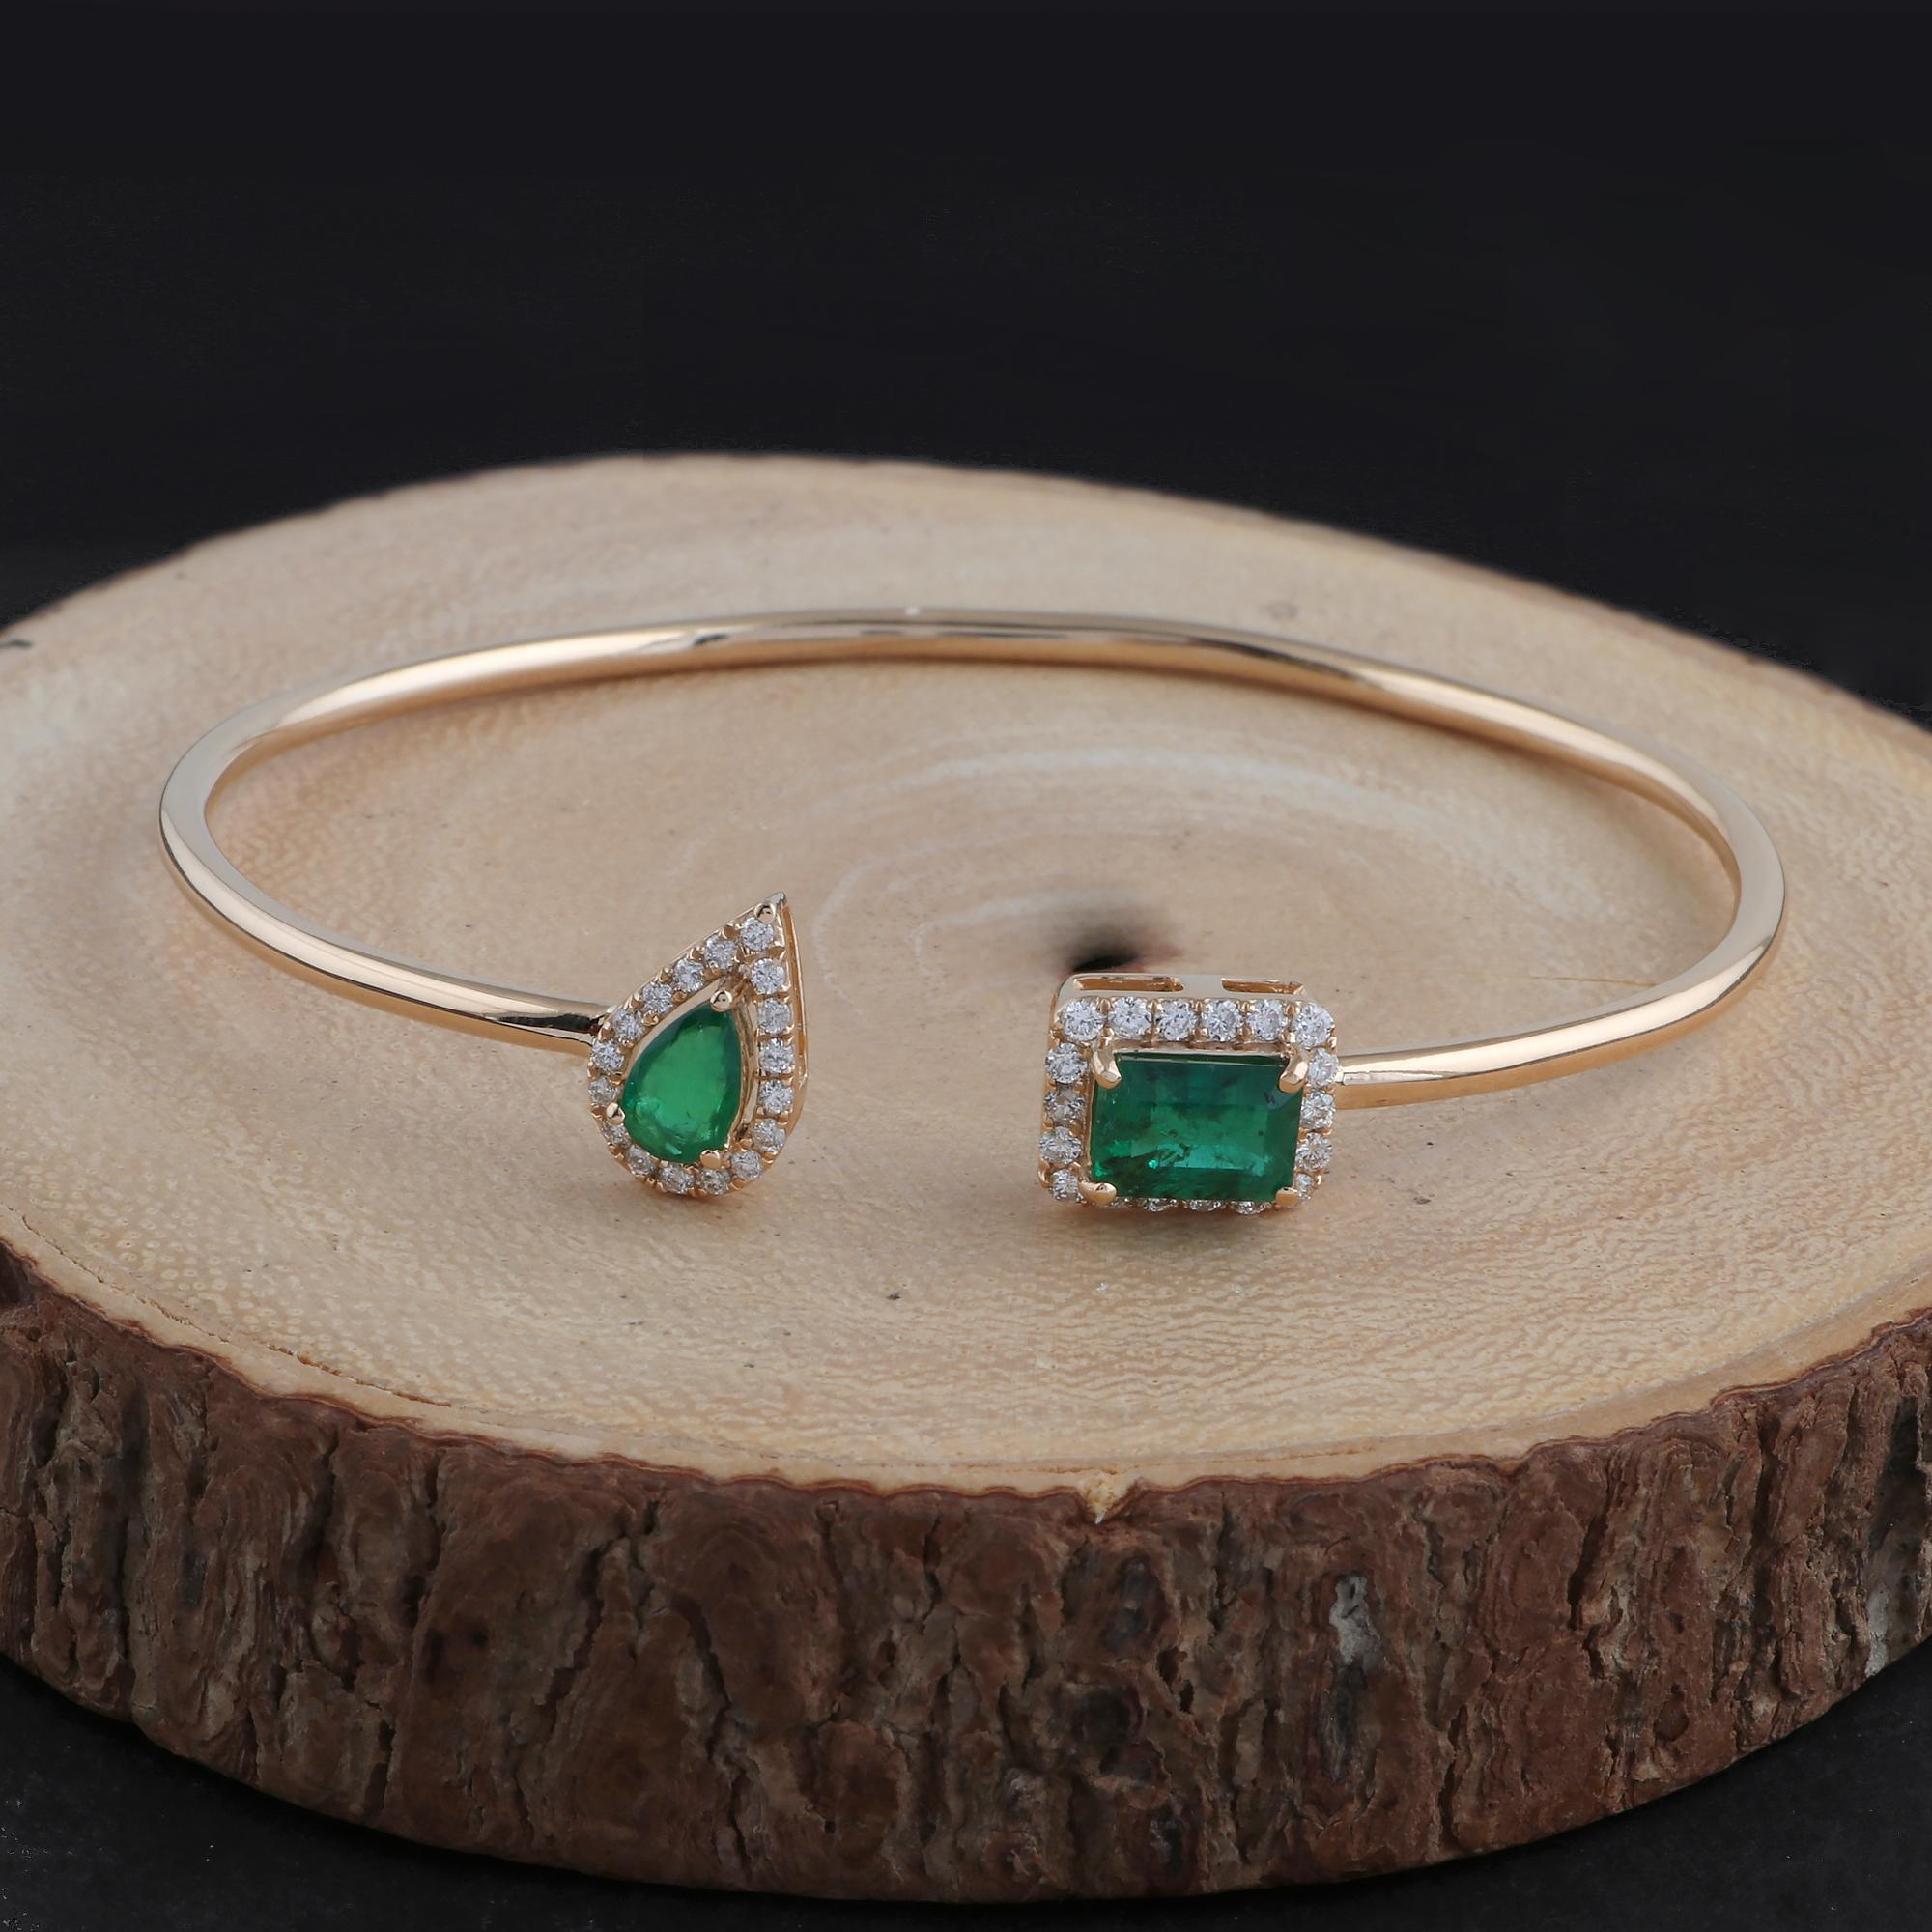 gold bracelet with emerald stone